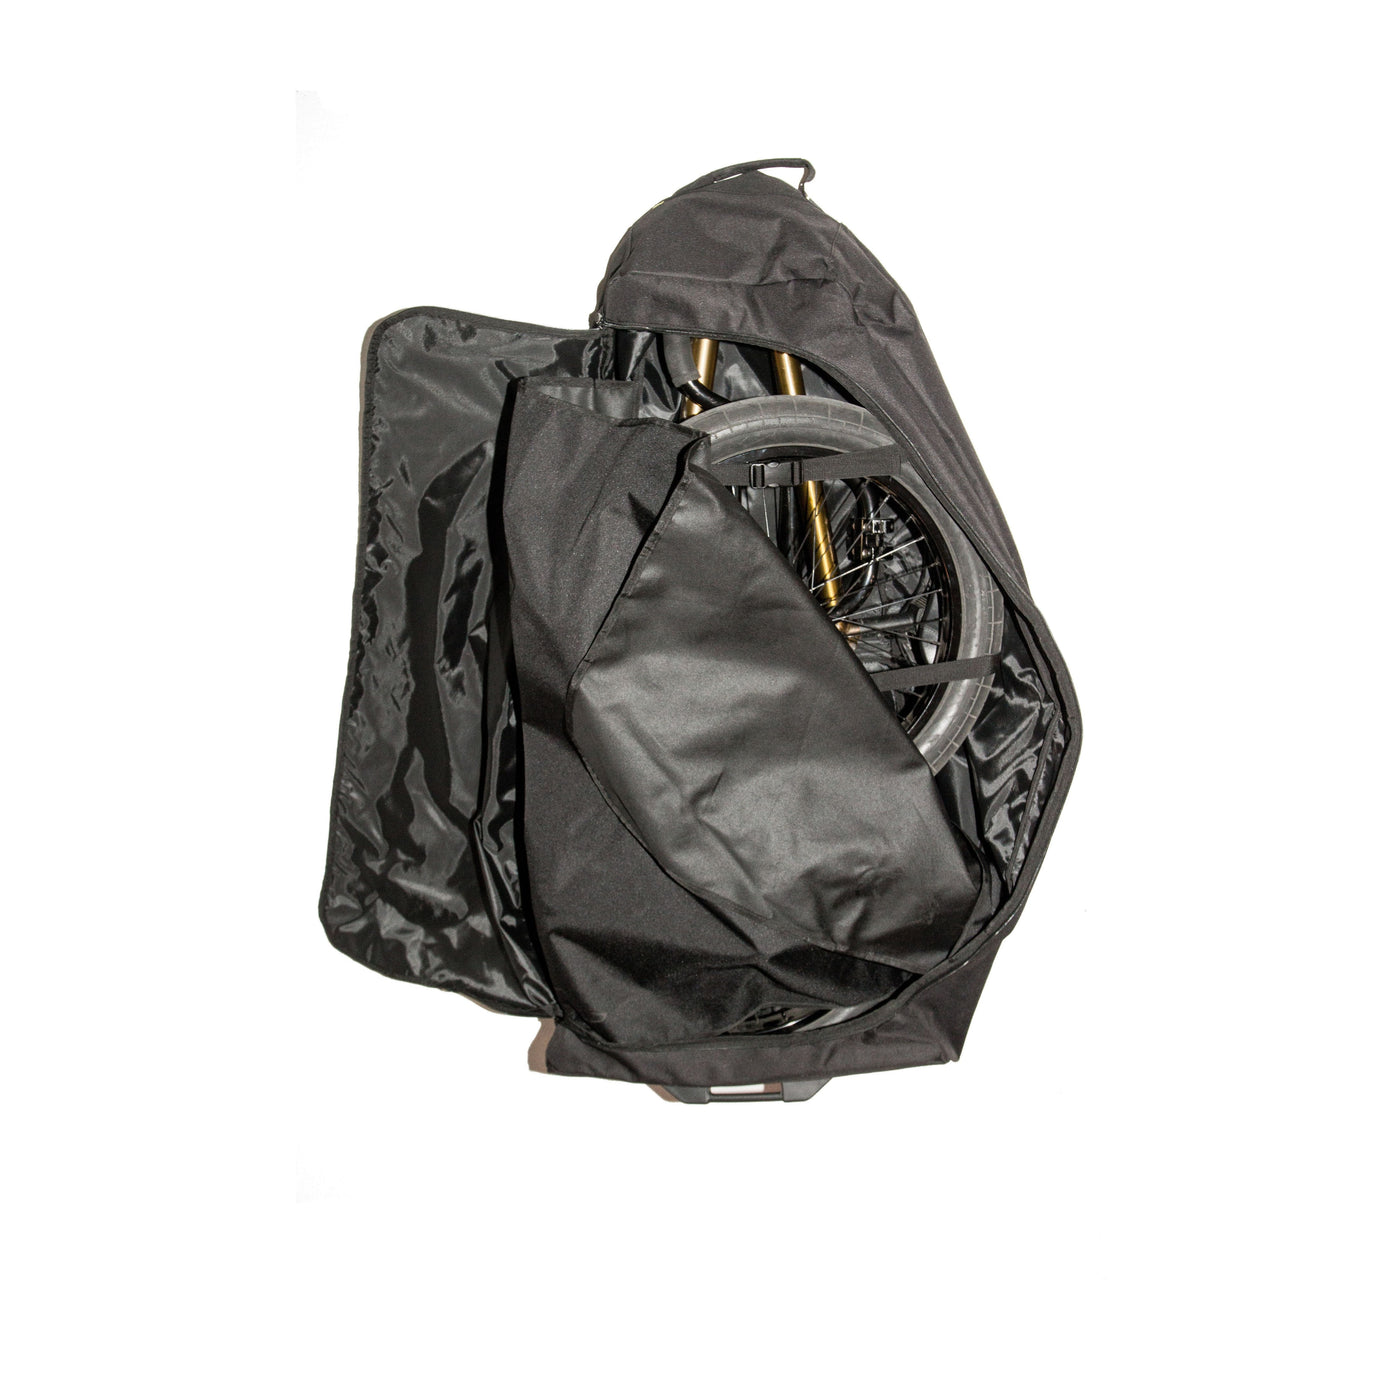 BMX Travel Bag - Skilldash